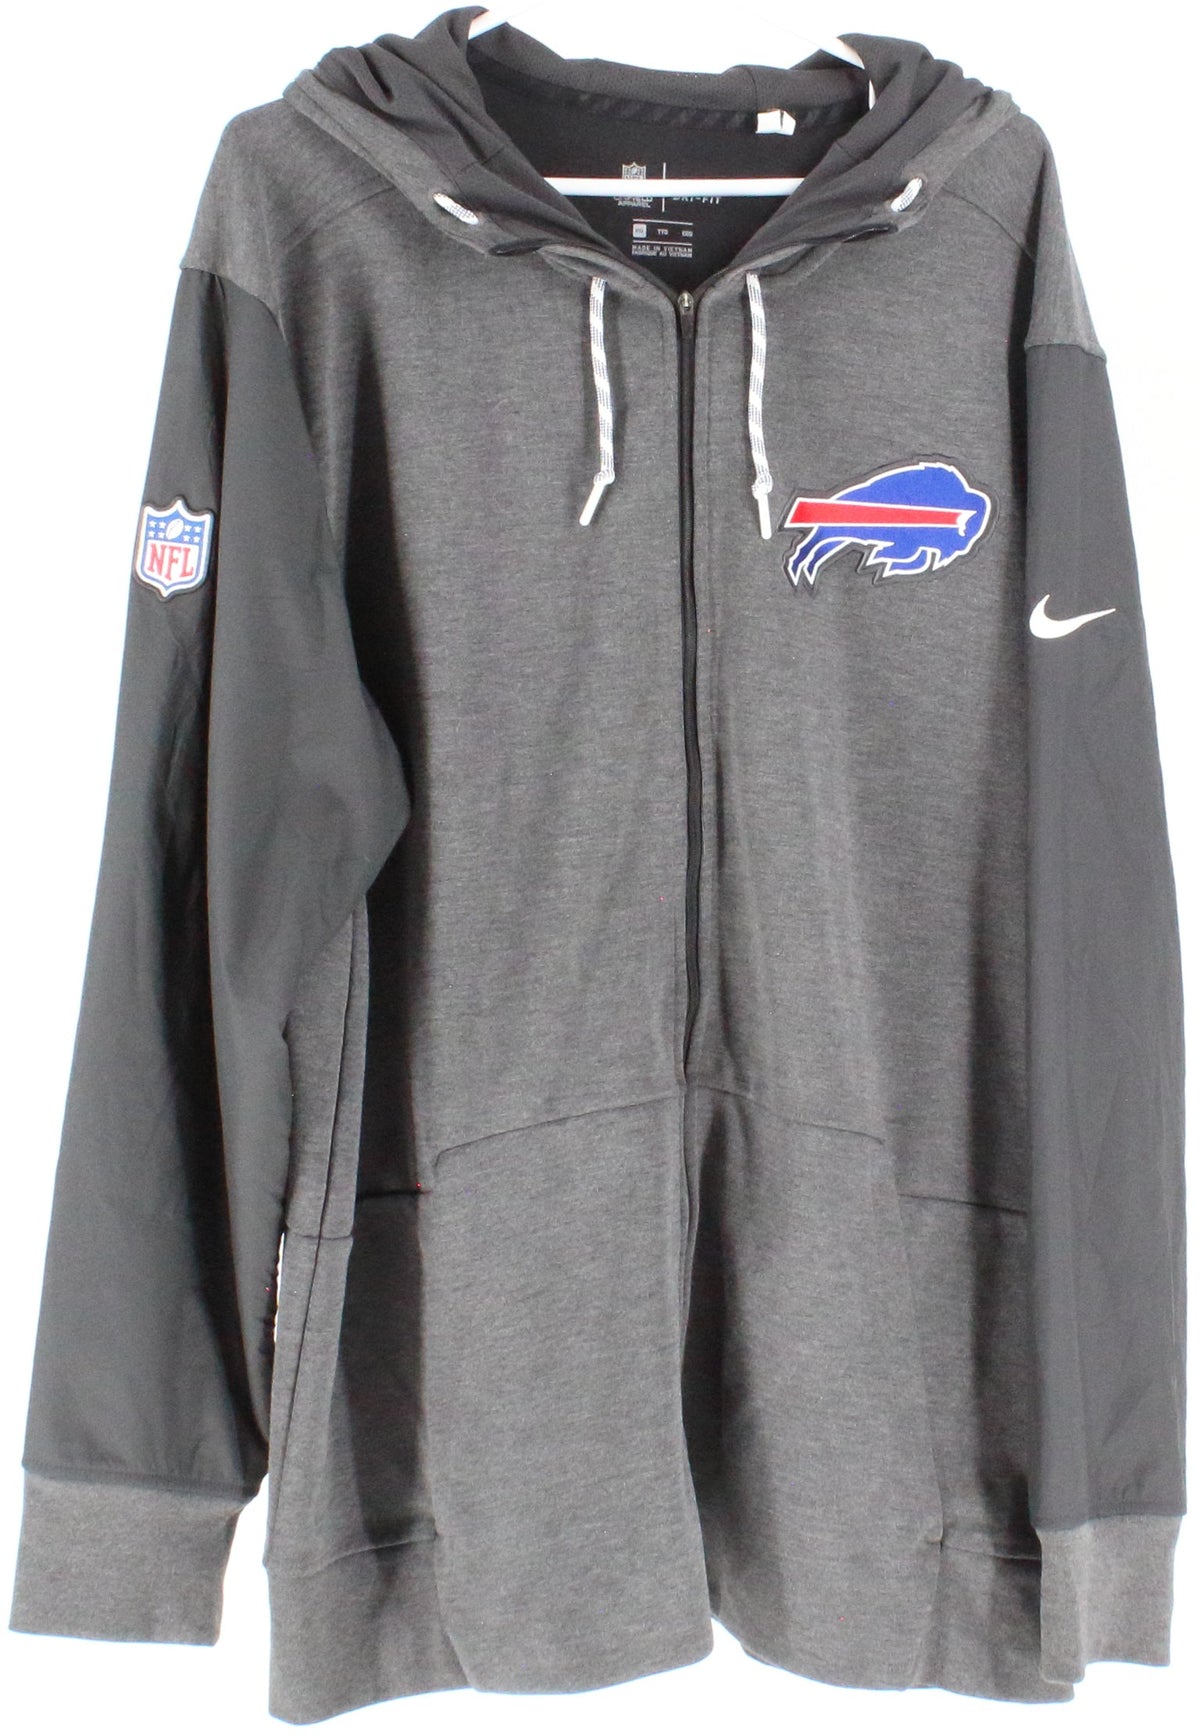 Nike Dri Fit NFL Bills Dark Grey and Black Full Zip Hooded Sweatshirt